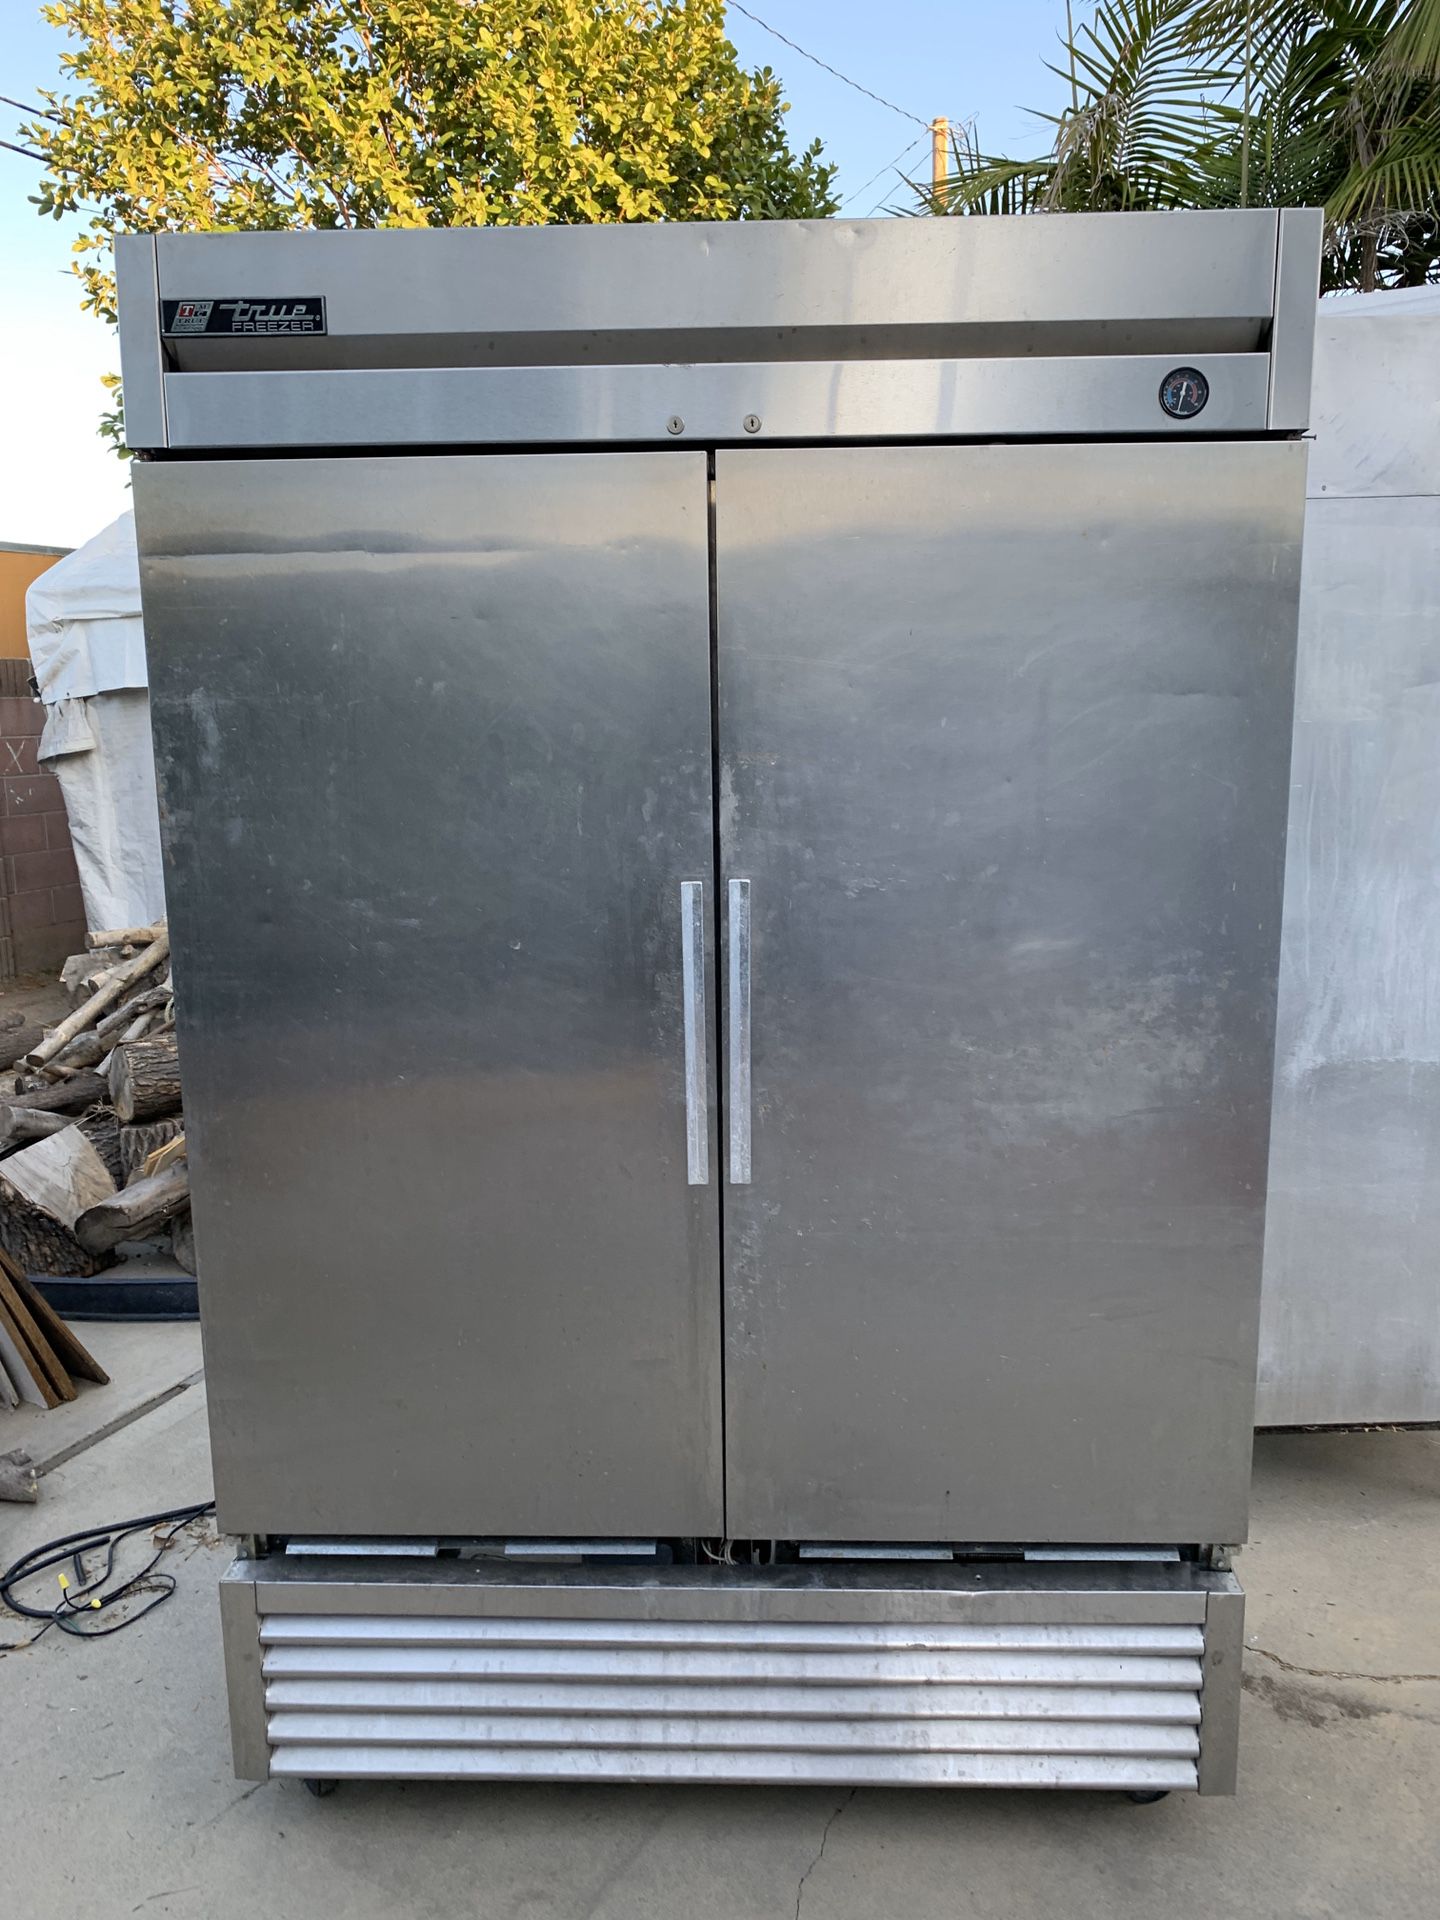 Commercial refrigerator and freezer. Needs repair